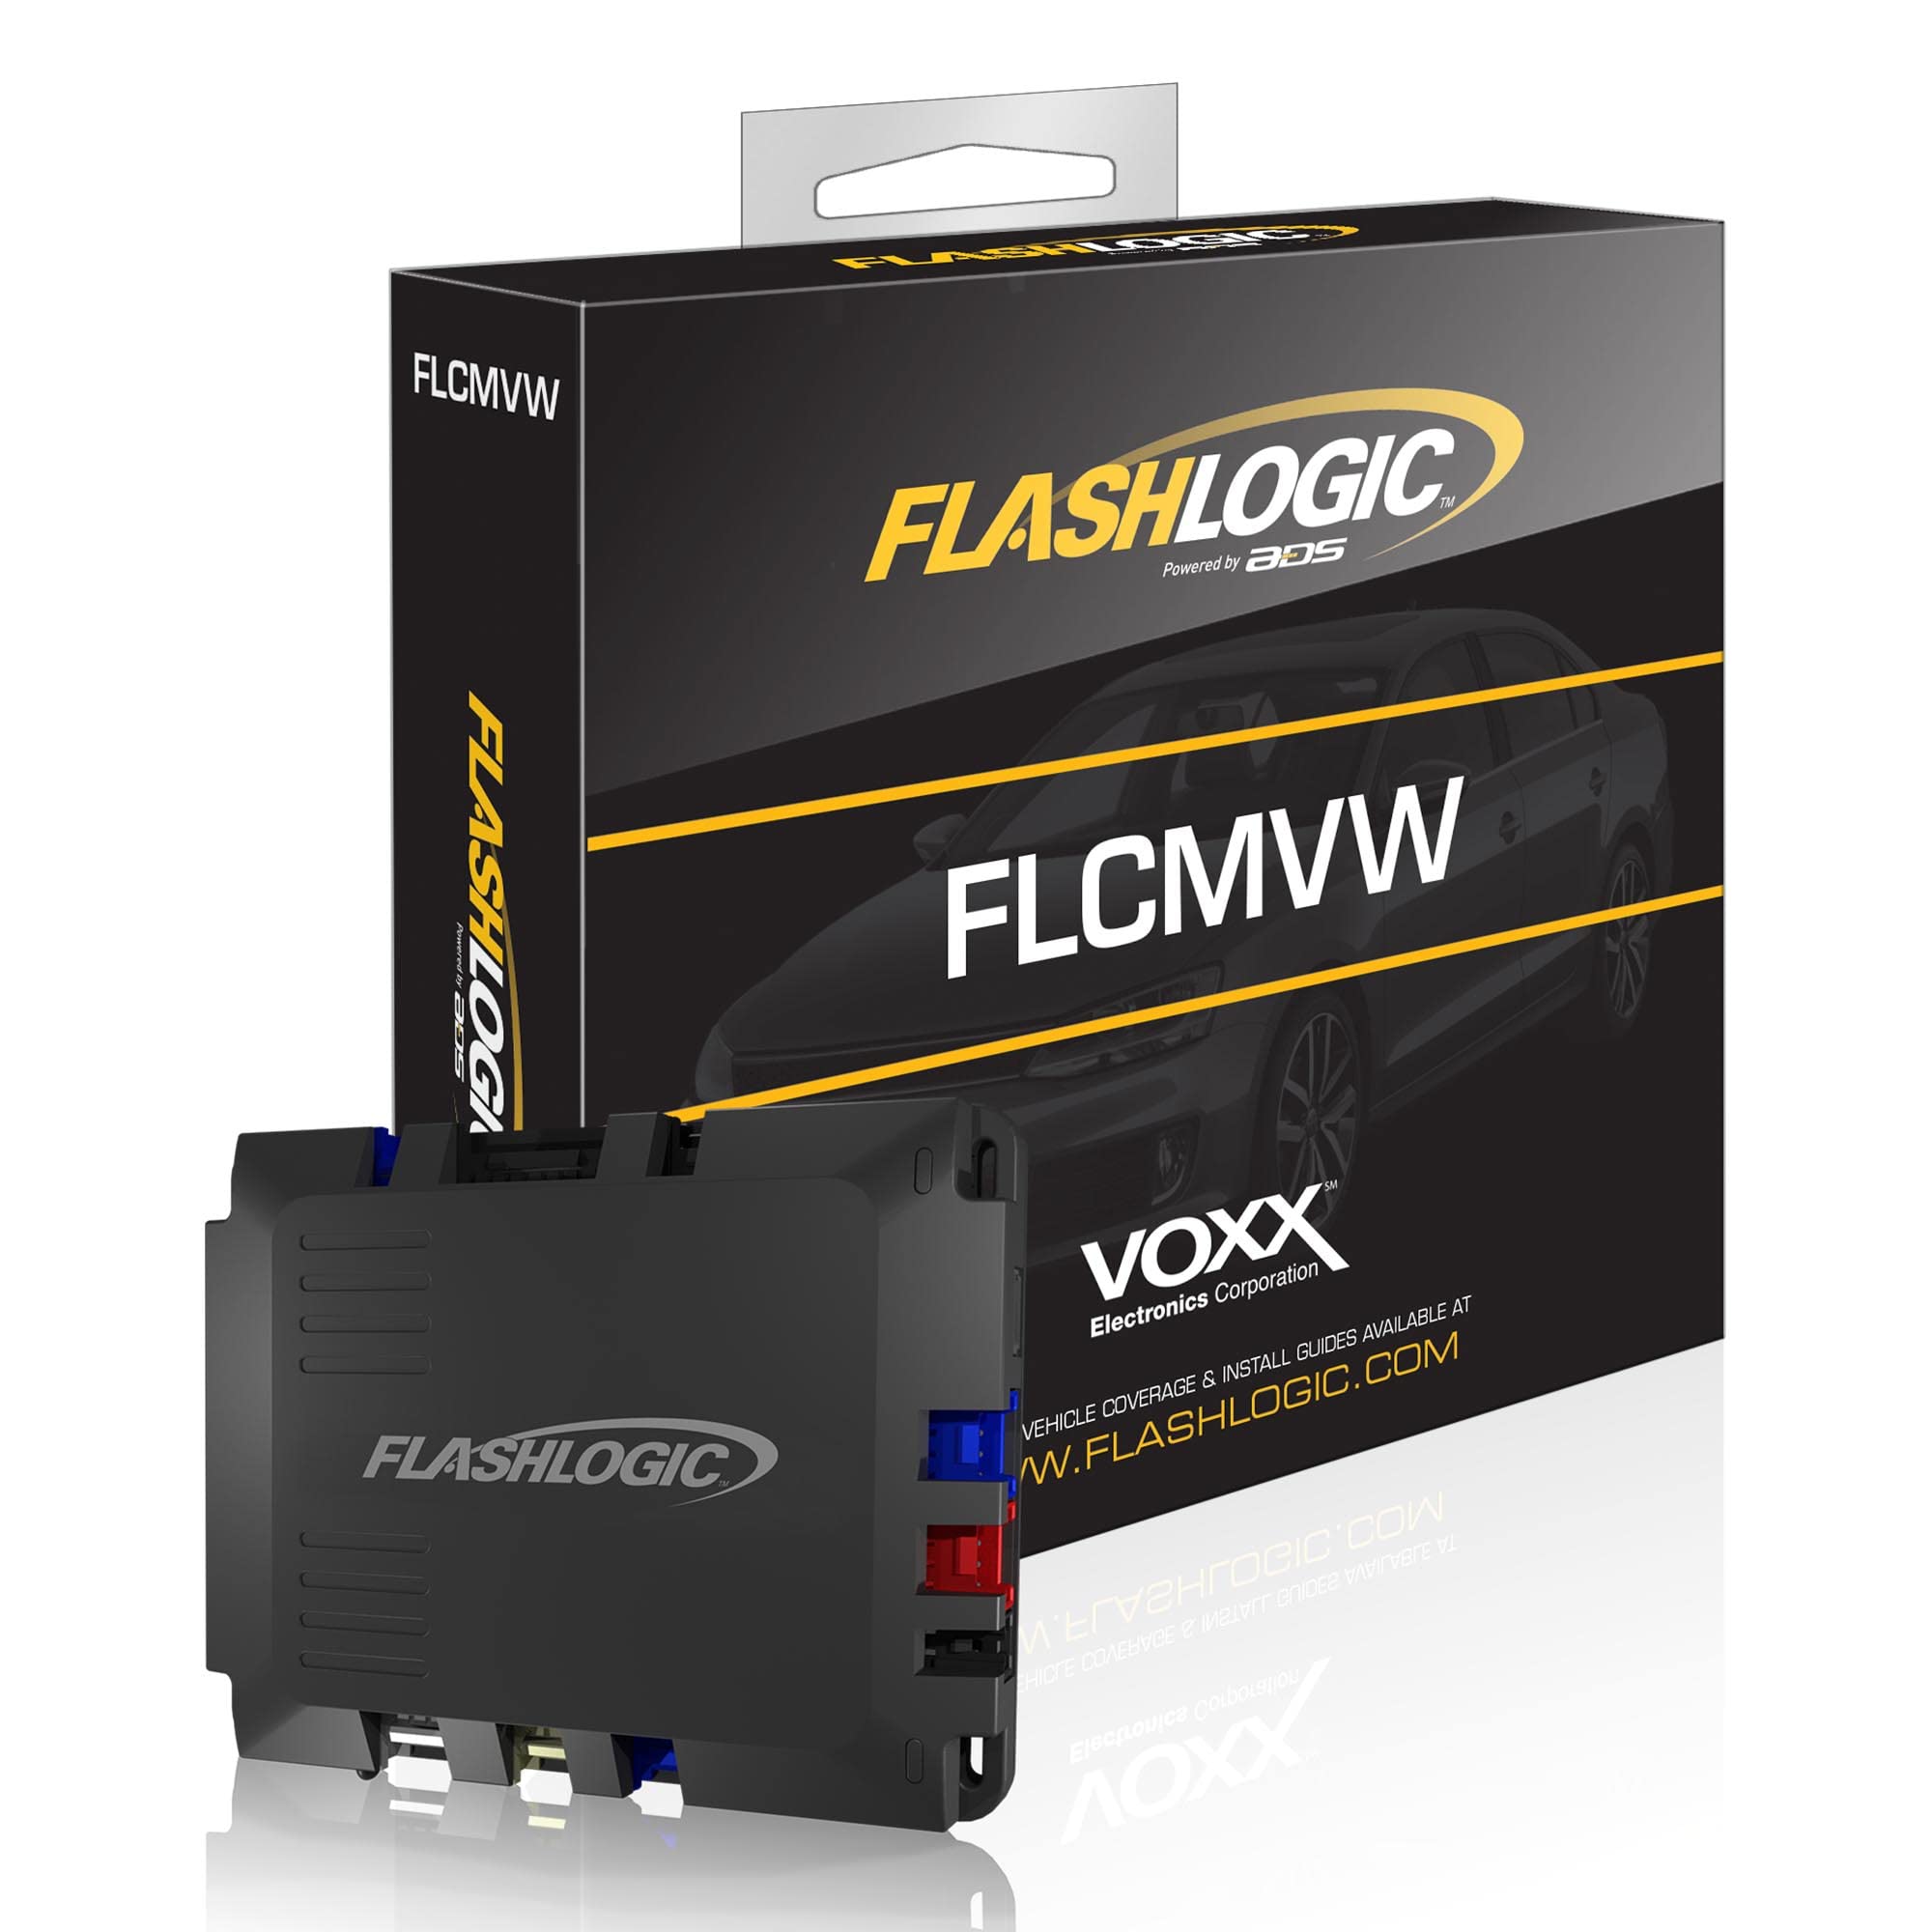 FlashLogic FLCMVW Remote Start Control Module for 2006+ VW & Audi